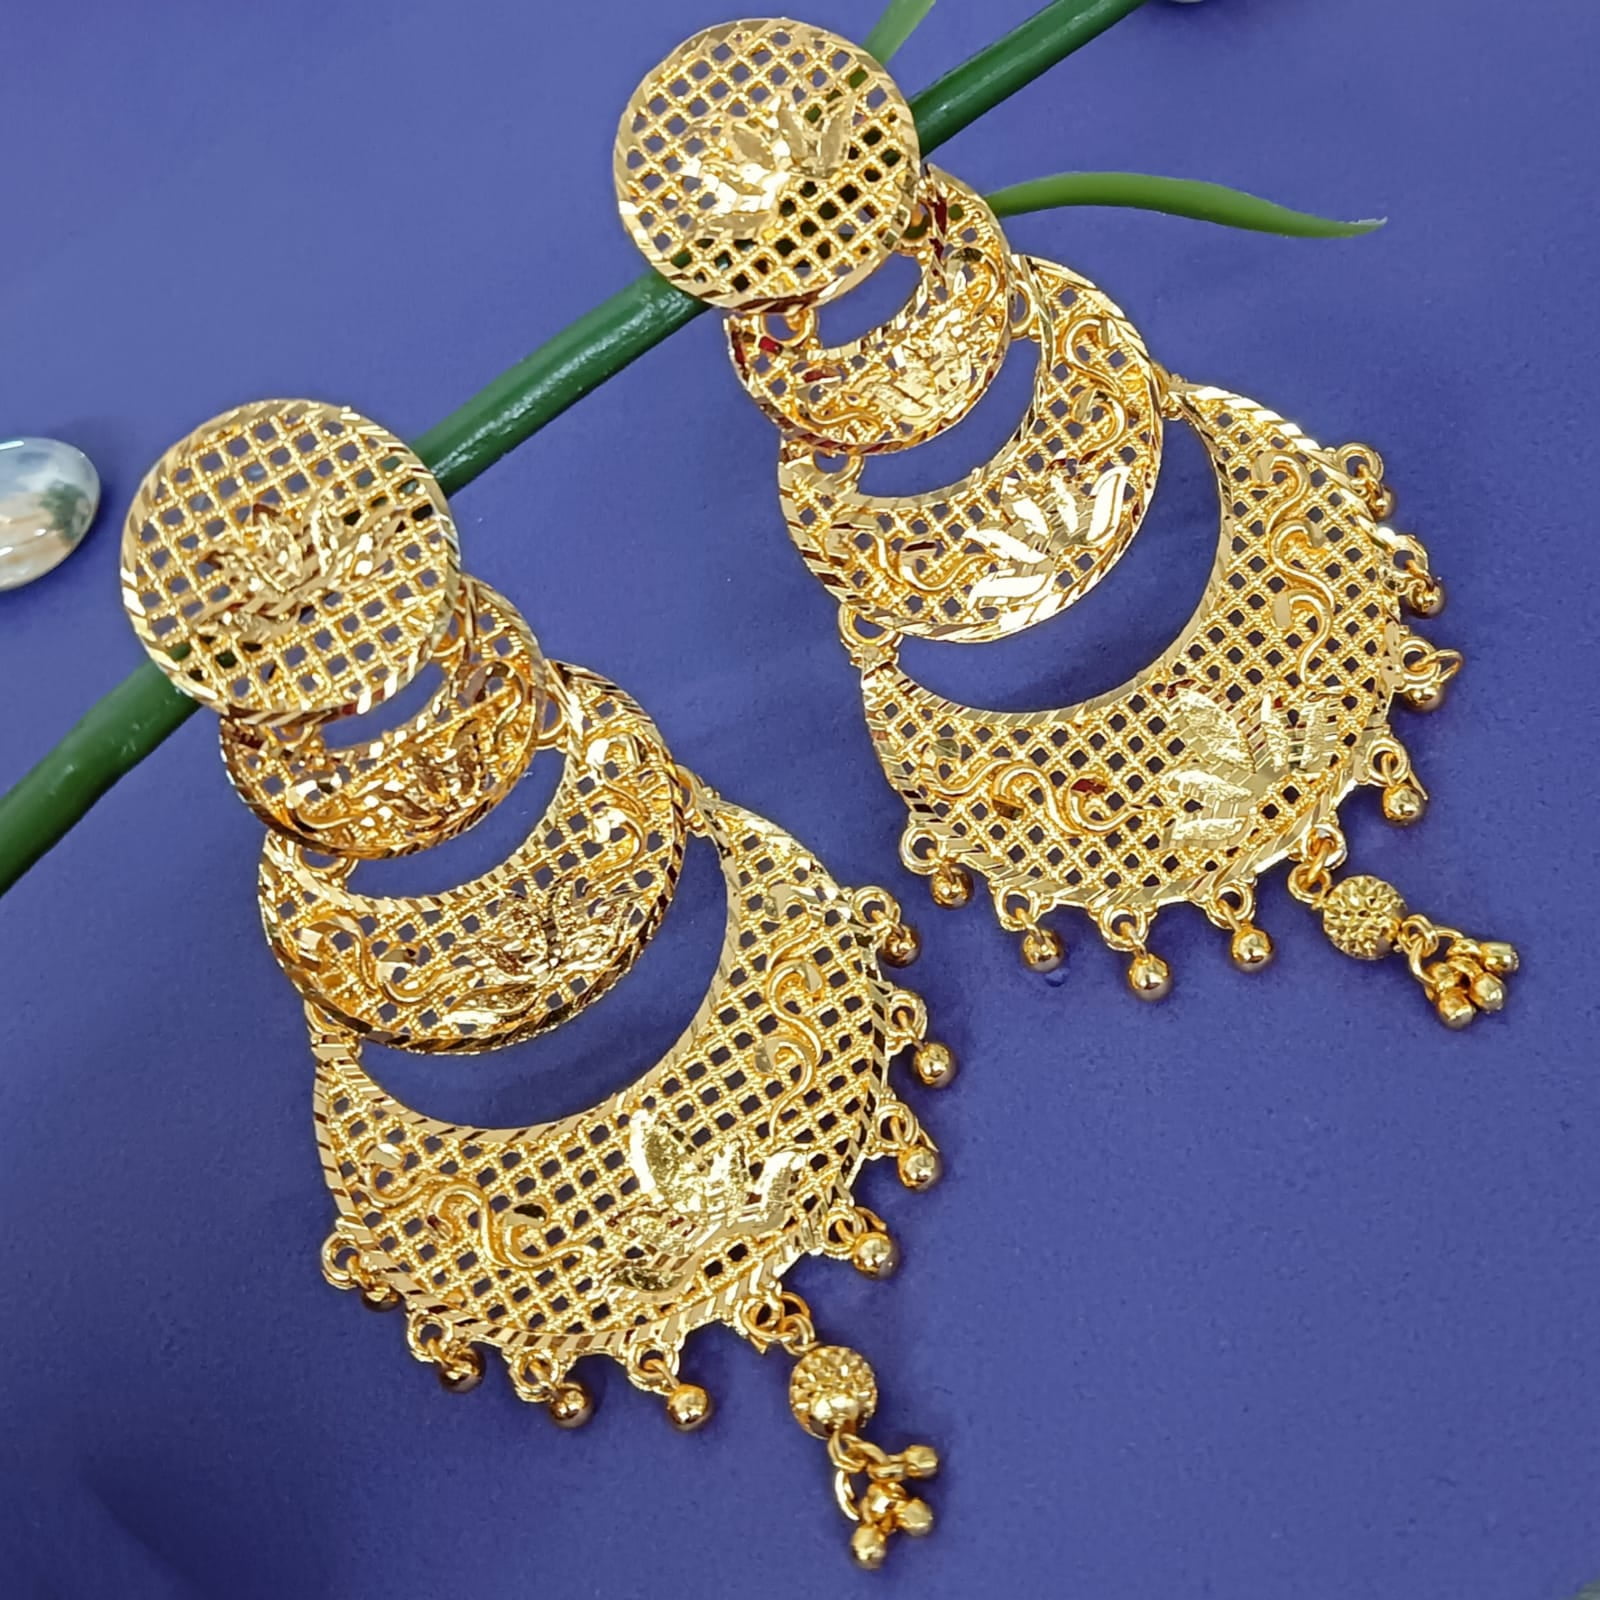 Chandbali Earrings | Bridal gold jewellery designs, Gold jewelry fashion,  Gold earrings models